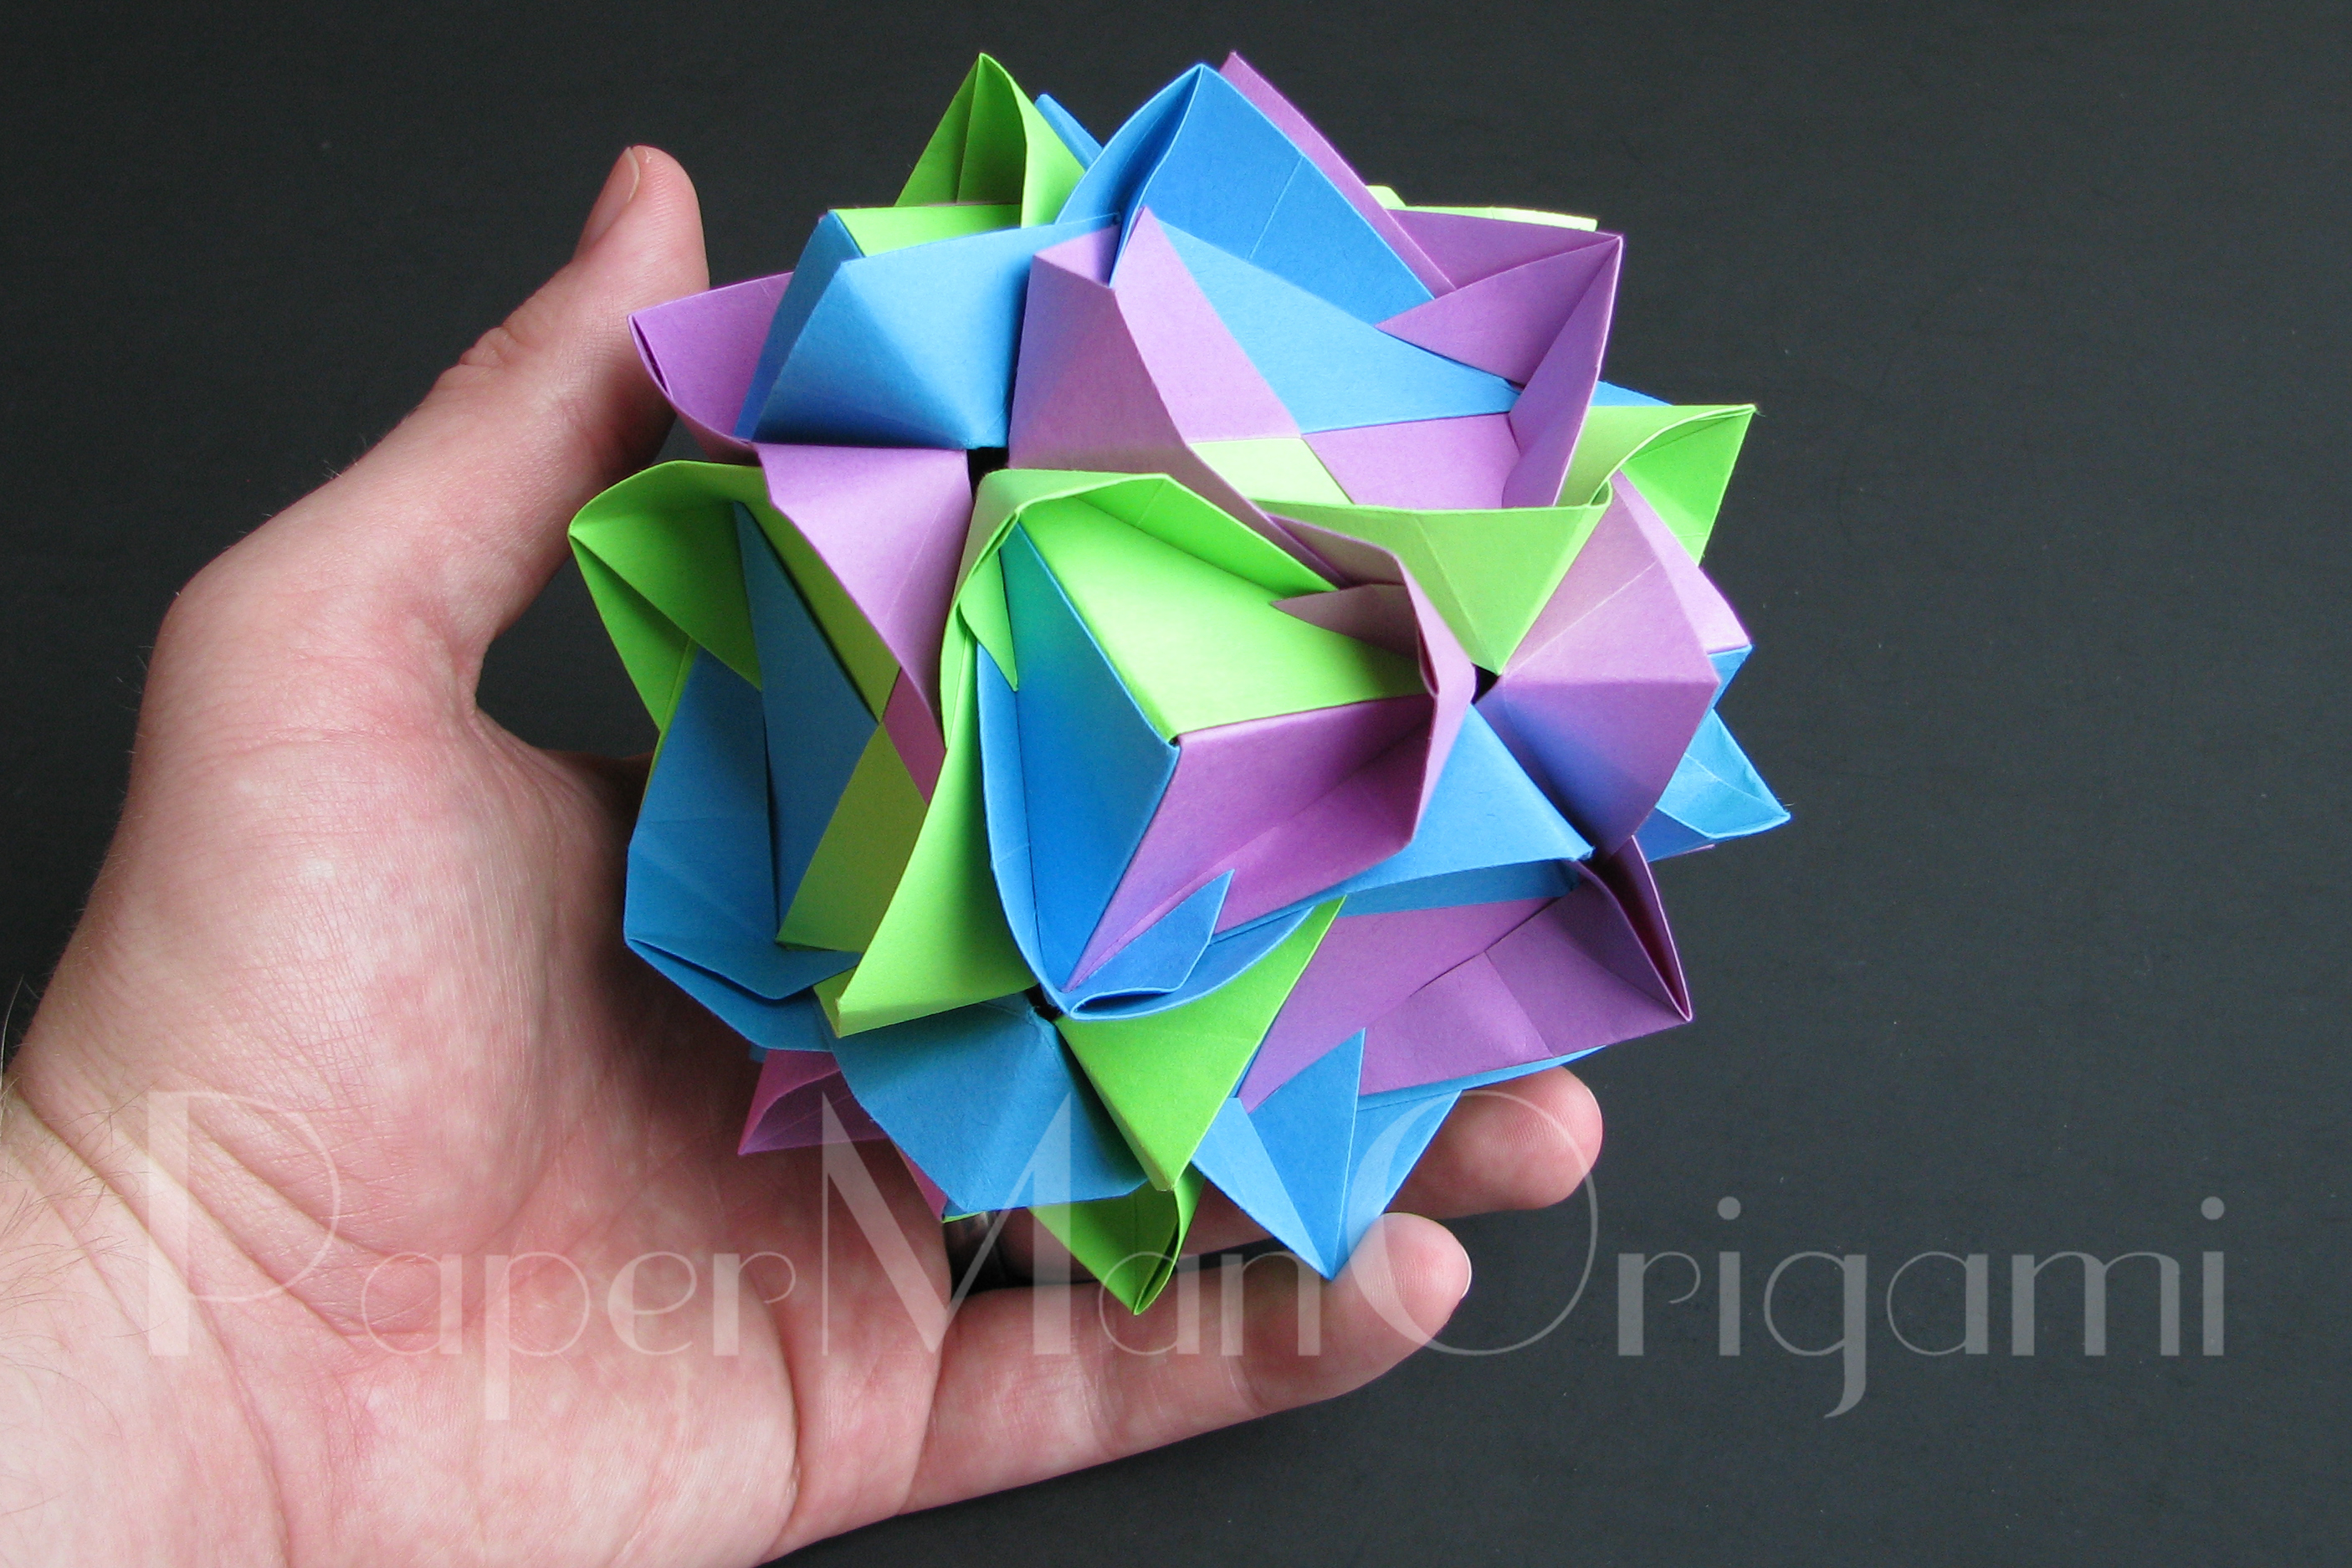 Tomoko Fuse Origami Instructions Origami Internet Gems Tomoko Fuse Unit Origami Origami